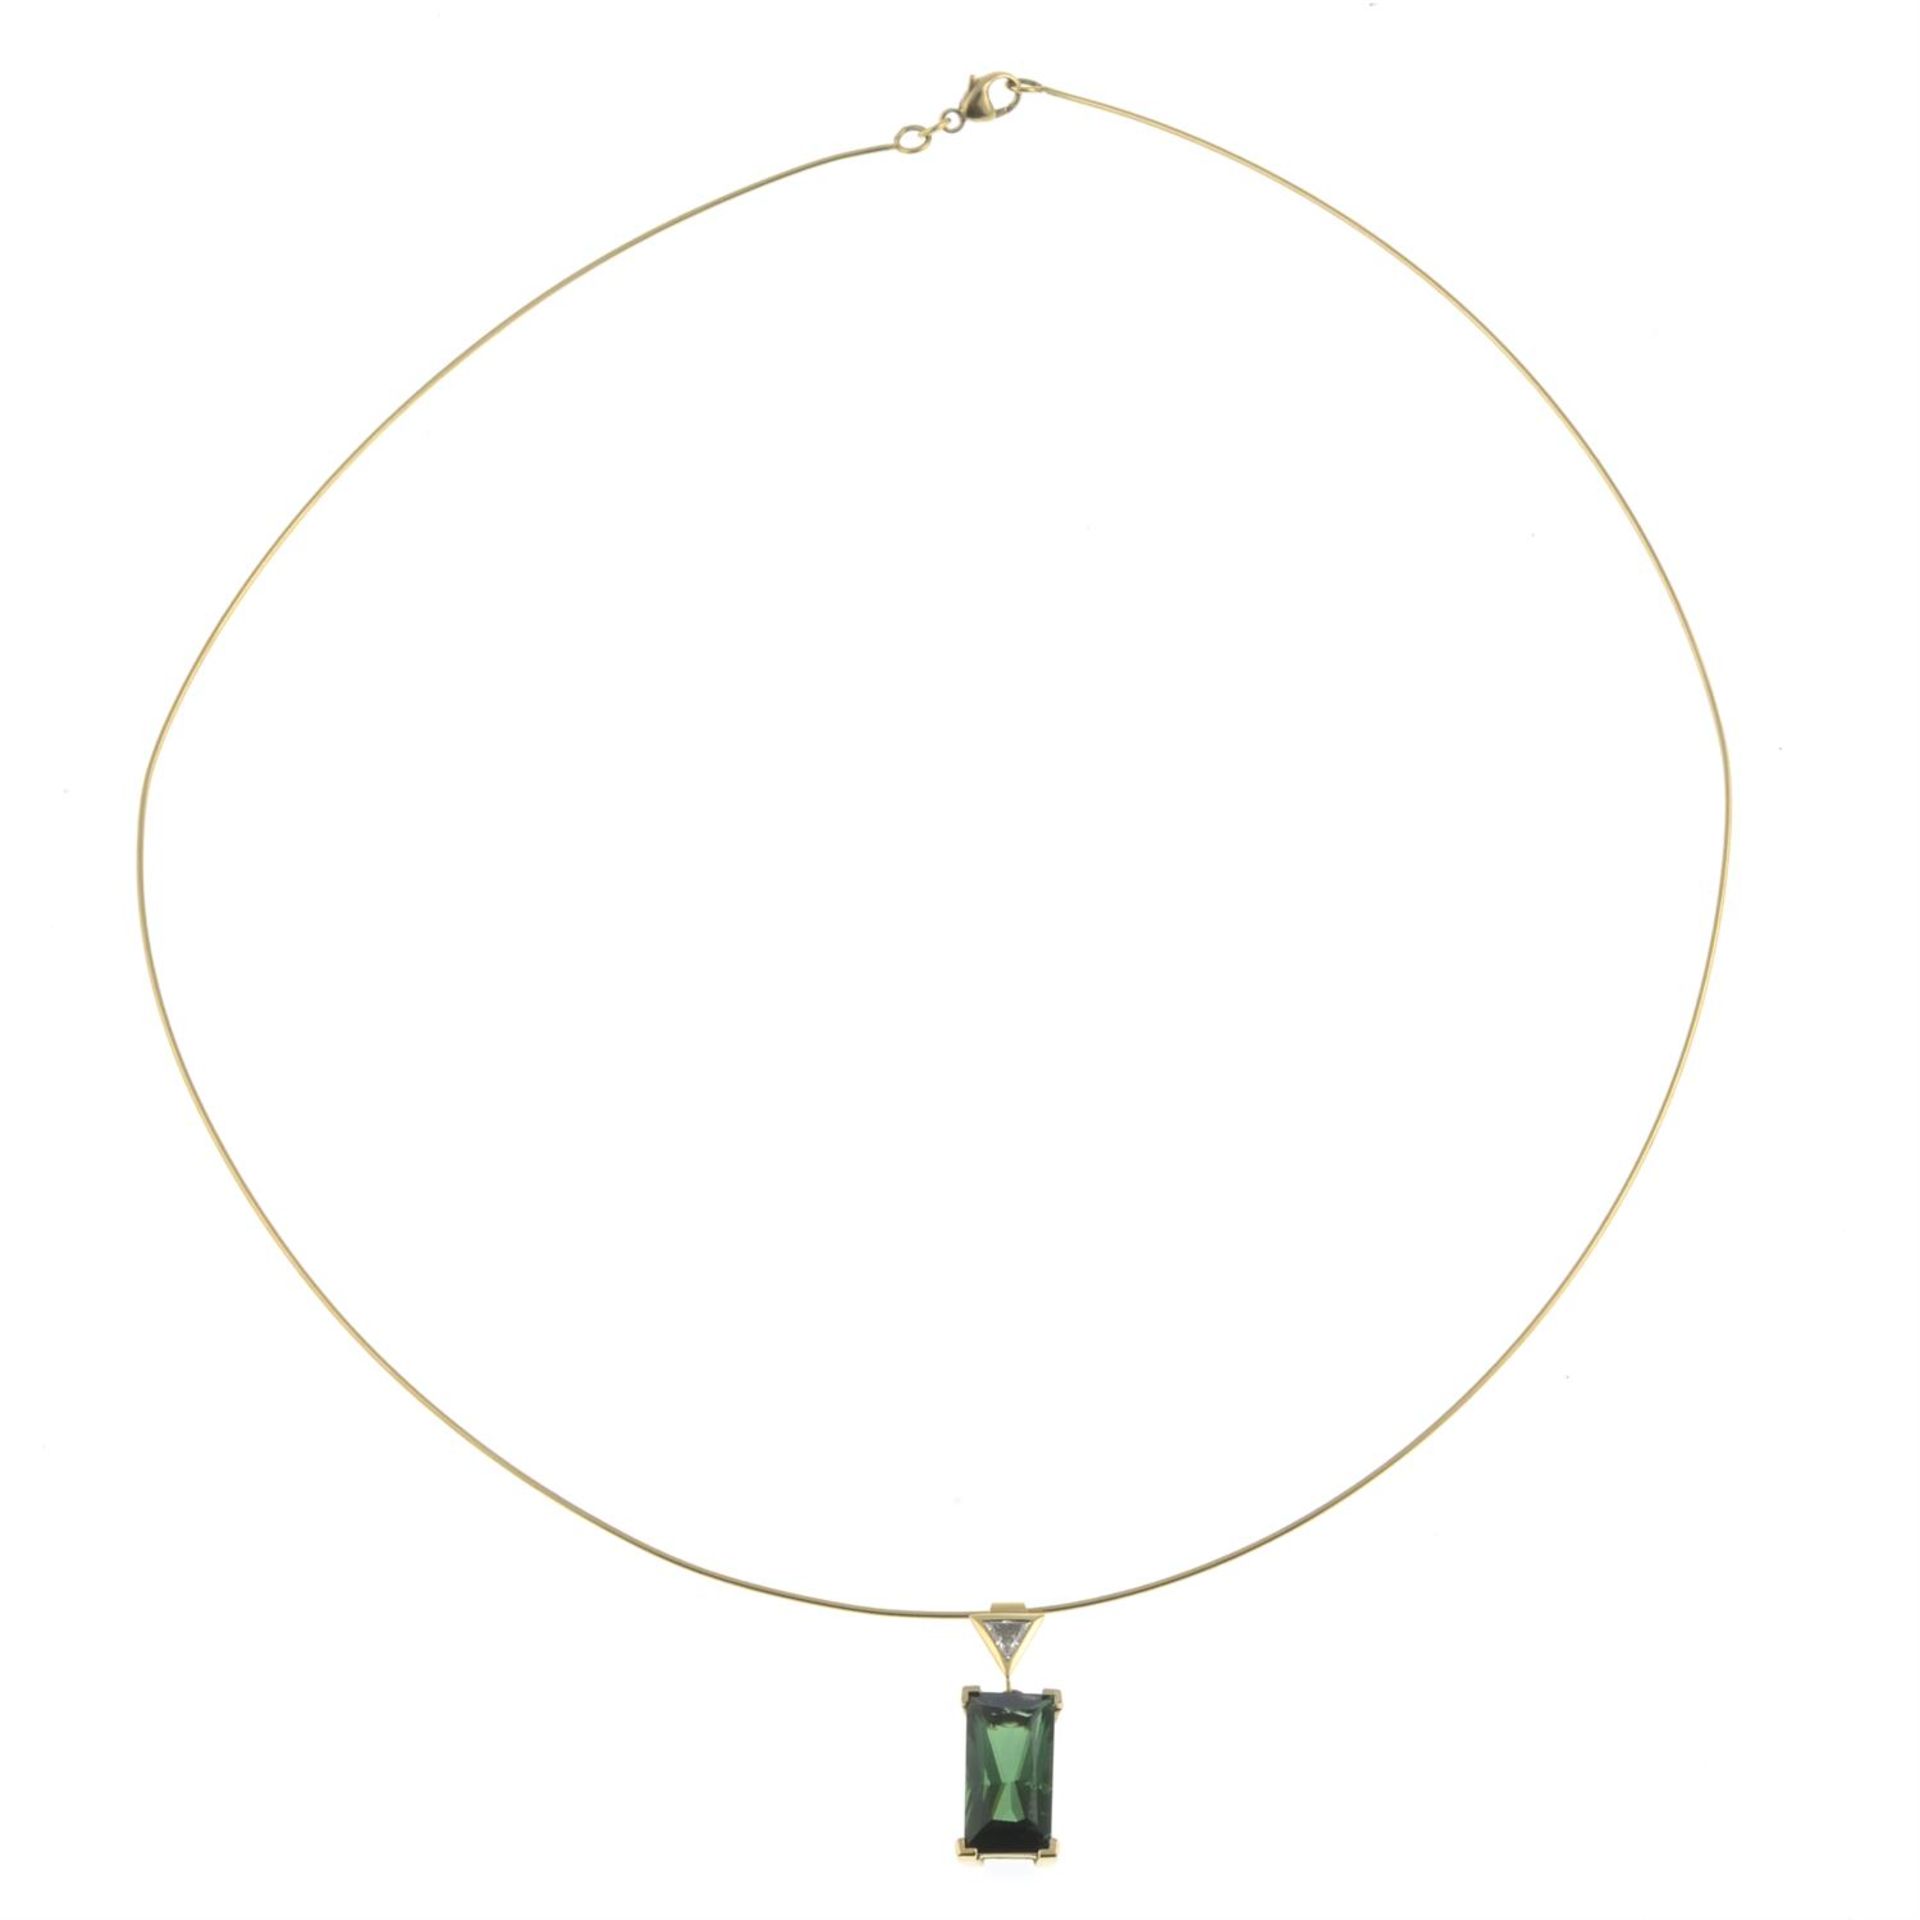 Green tourmaline & diamond pendant, on a wire - Image 2 of 2